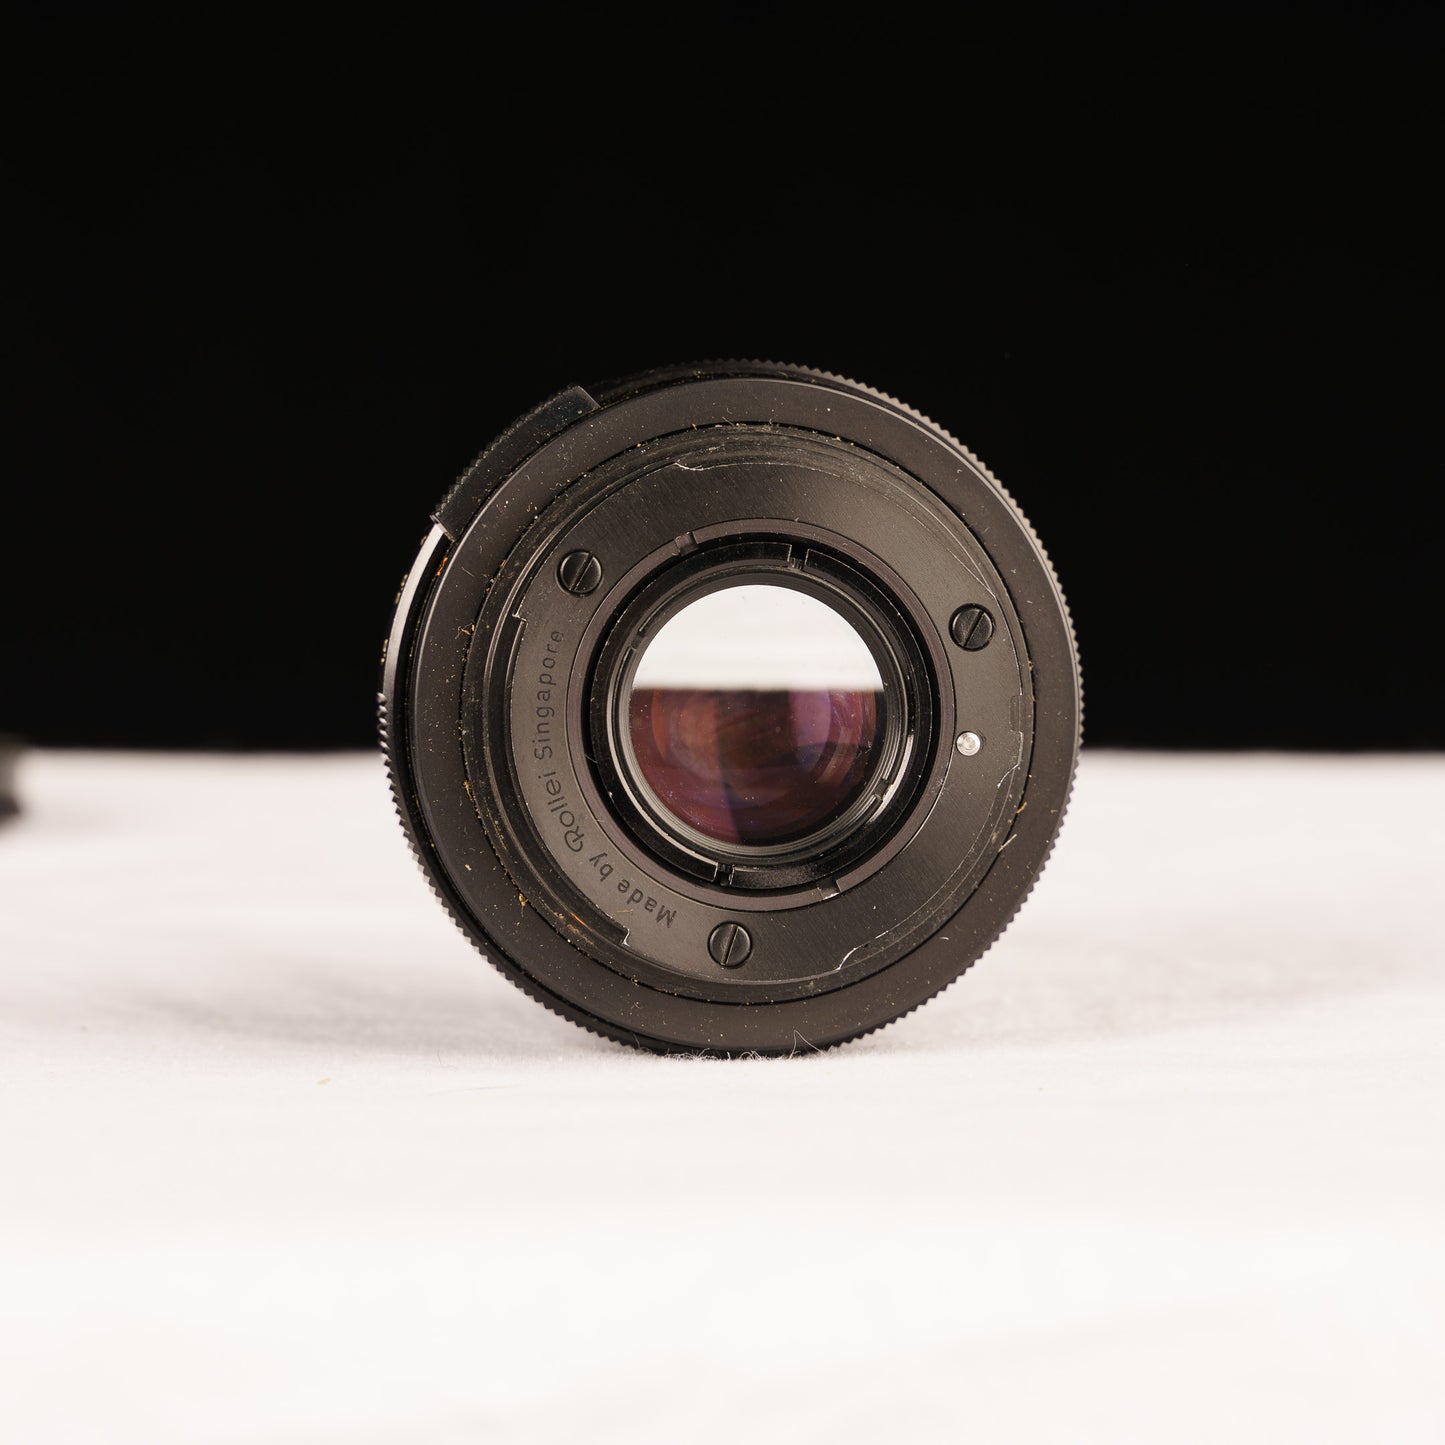 Rolleiflex SL35 35mm Film SLR with Rollei Planar 50mm f/1.8 Lens and Carl Zeiss Distagon 25mm f/2.8 QBM Lens